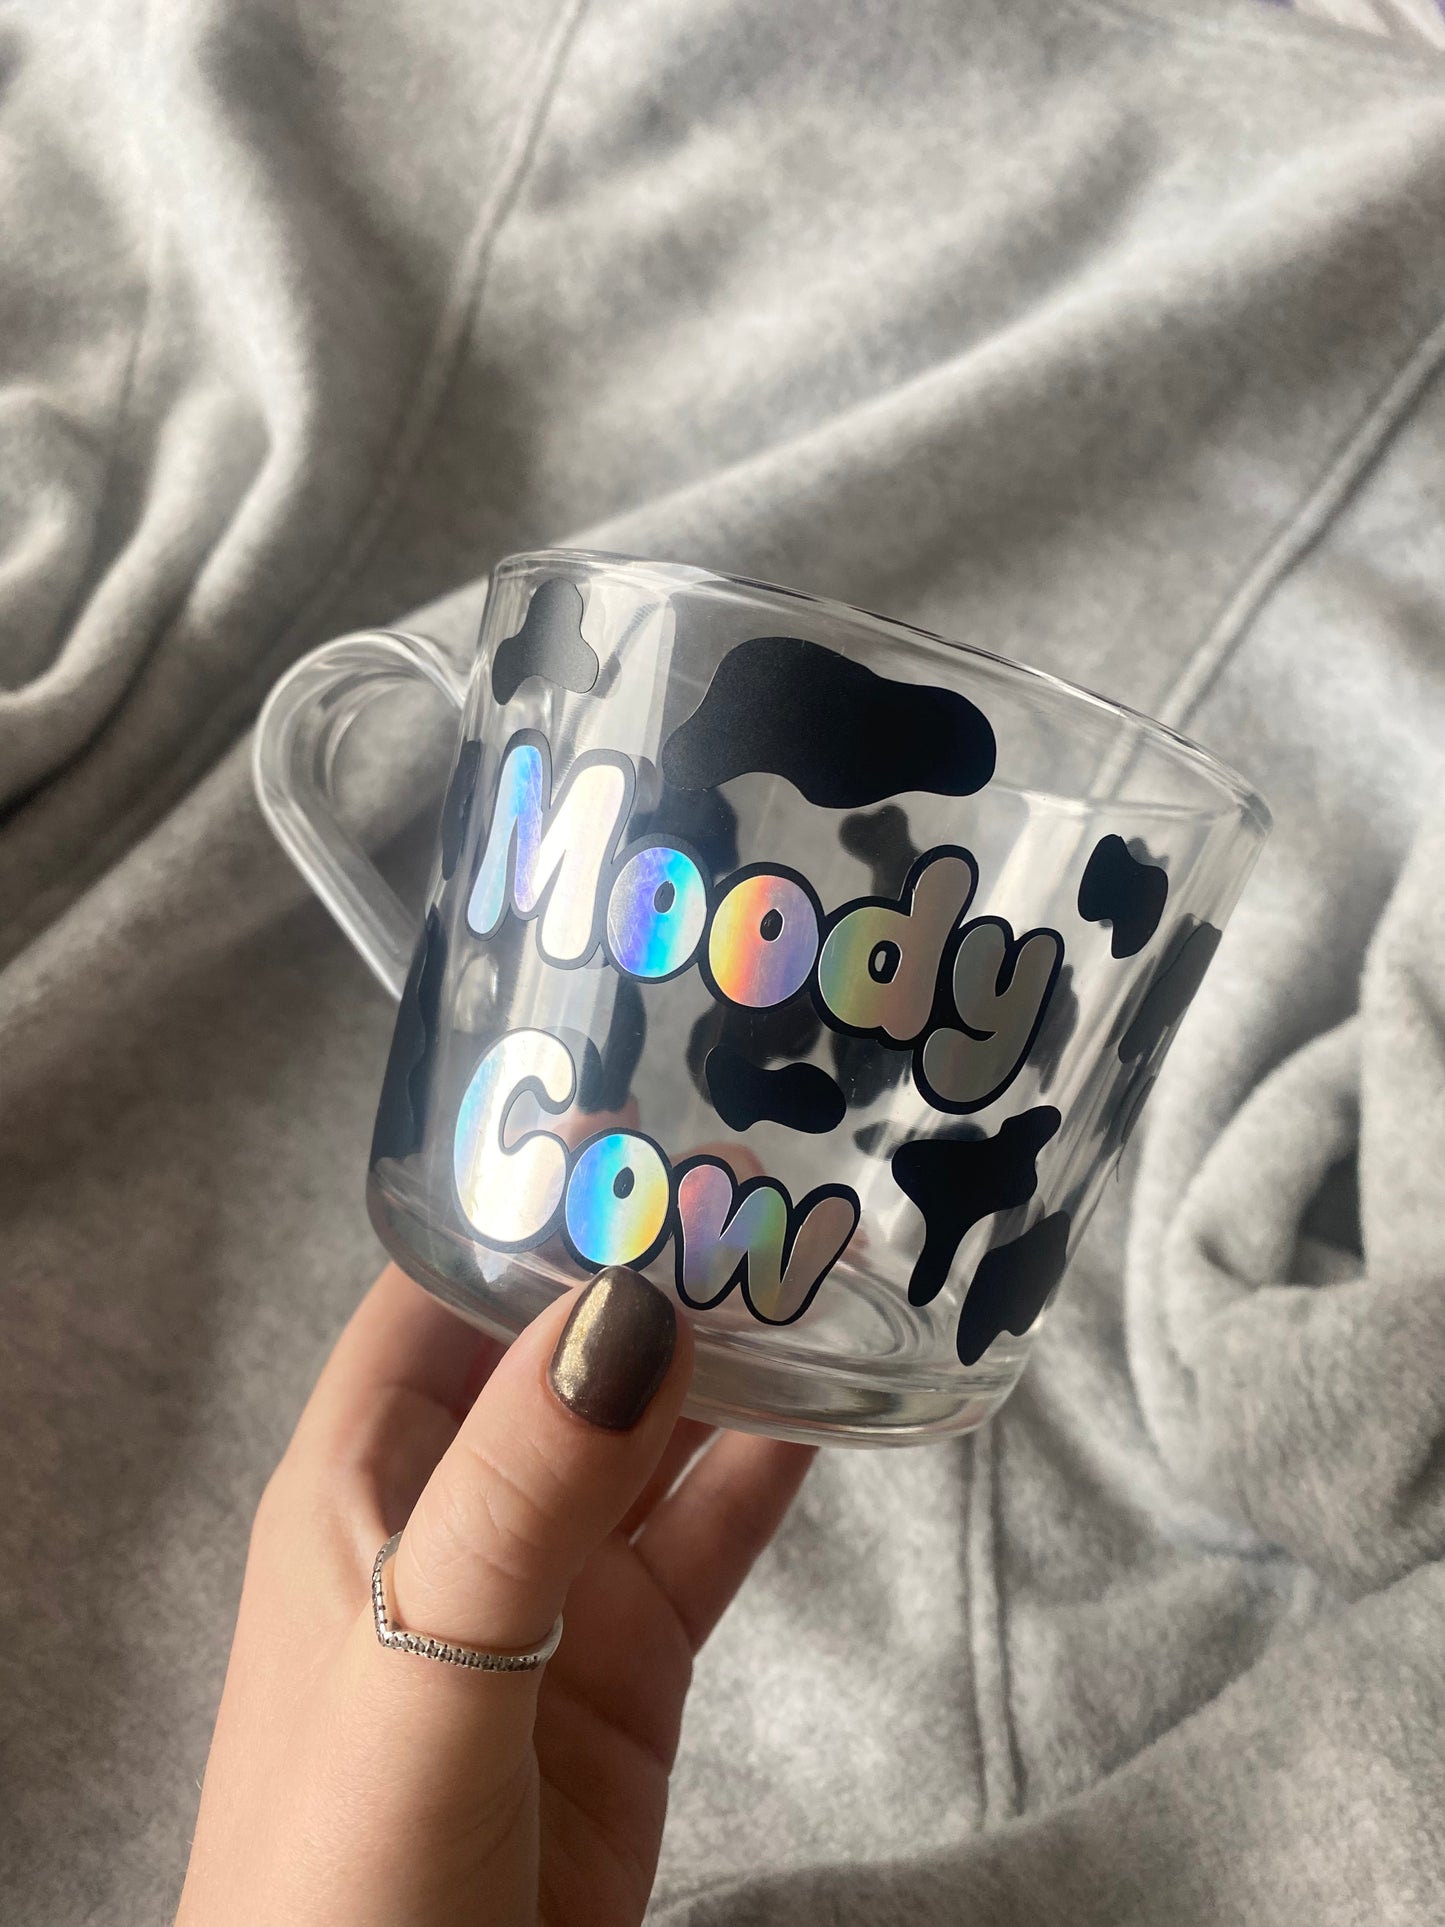 Moody cow mug